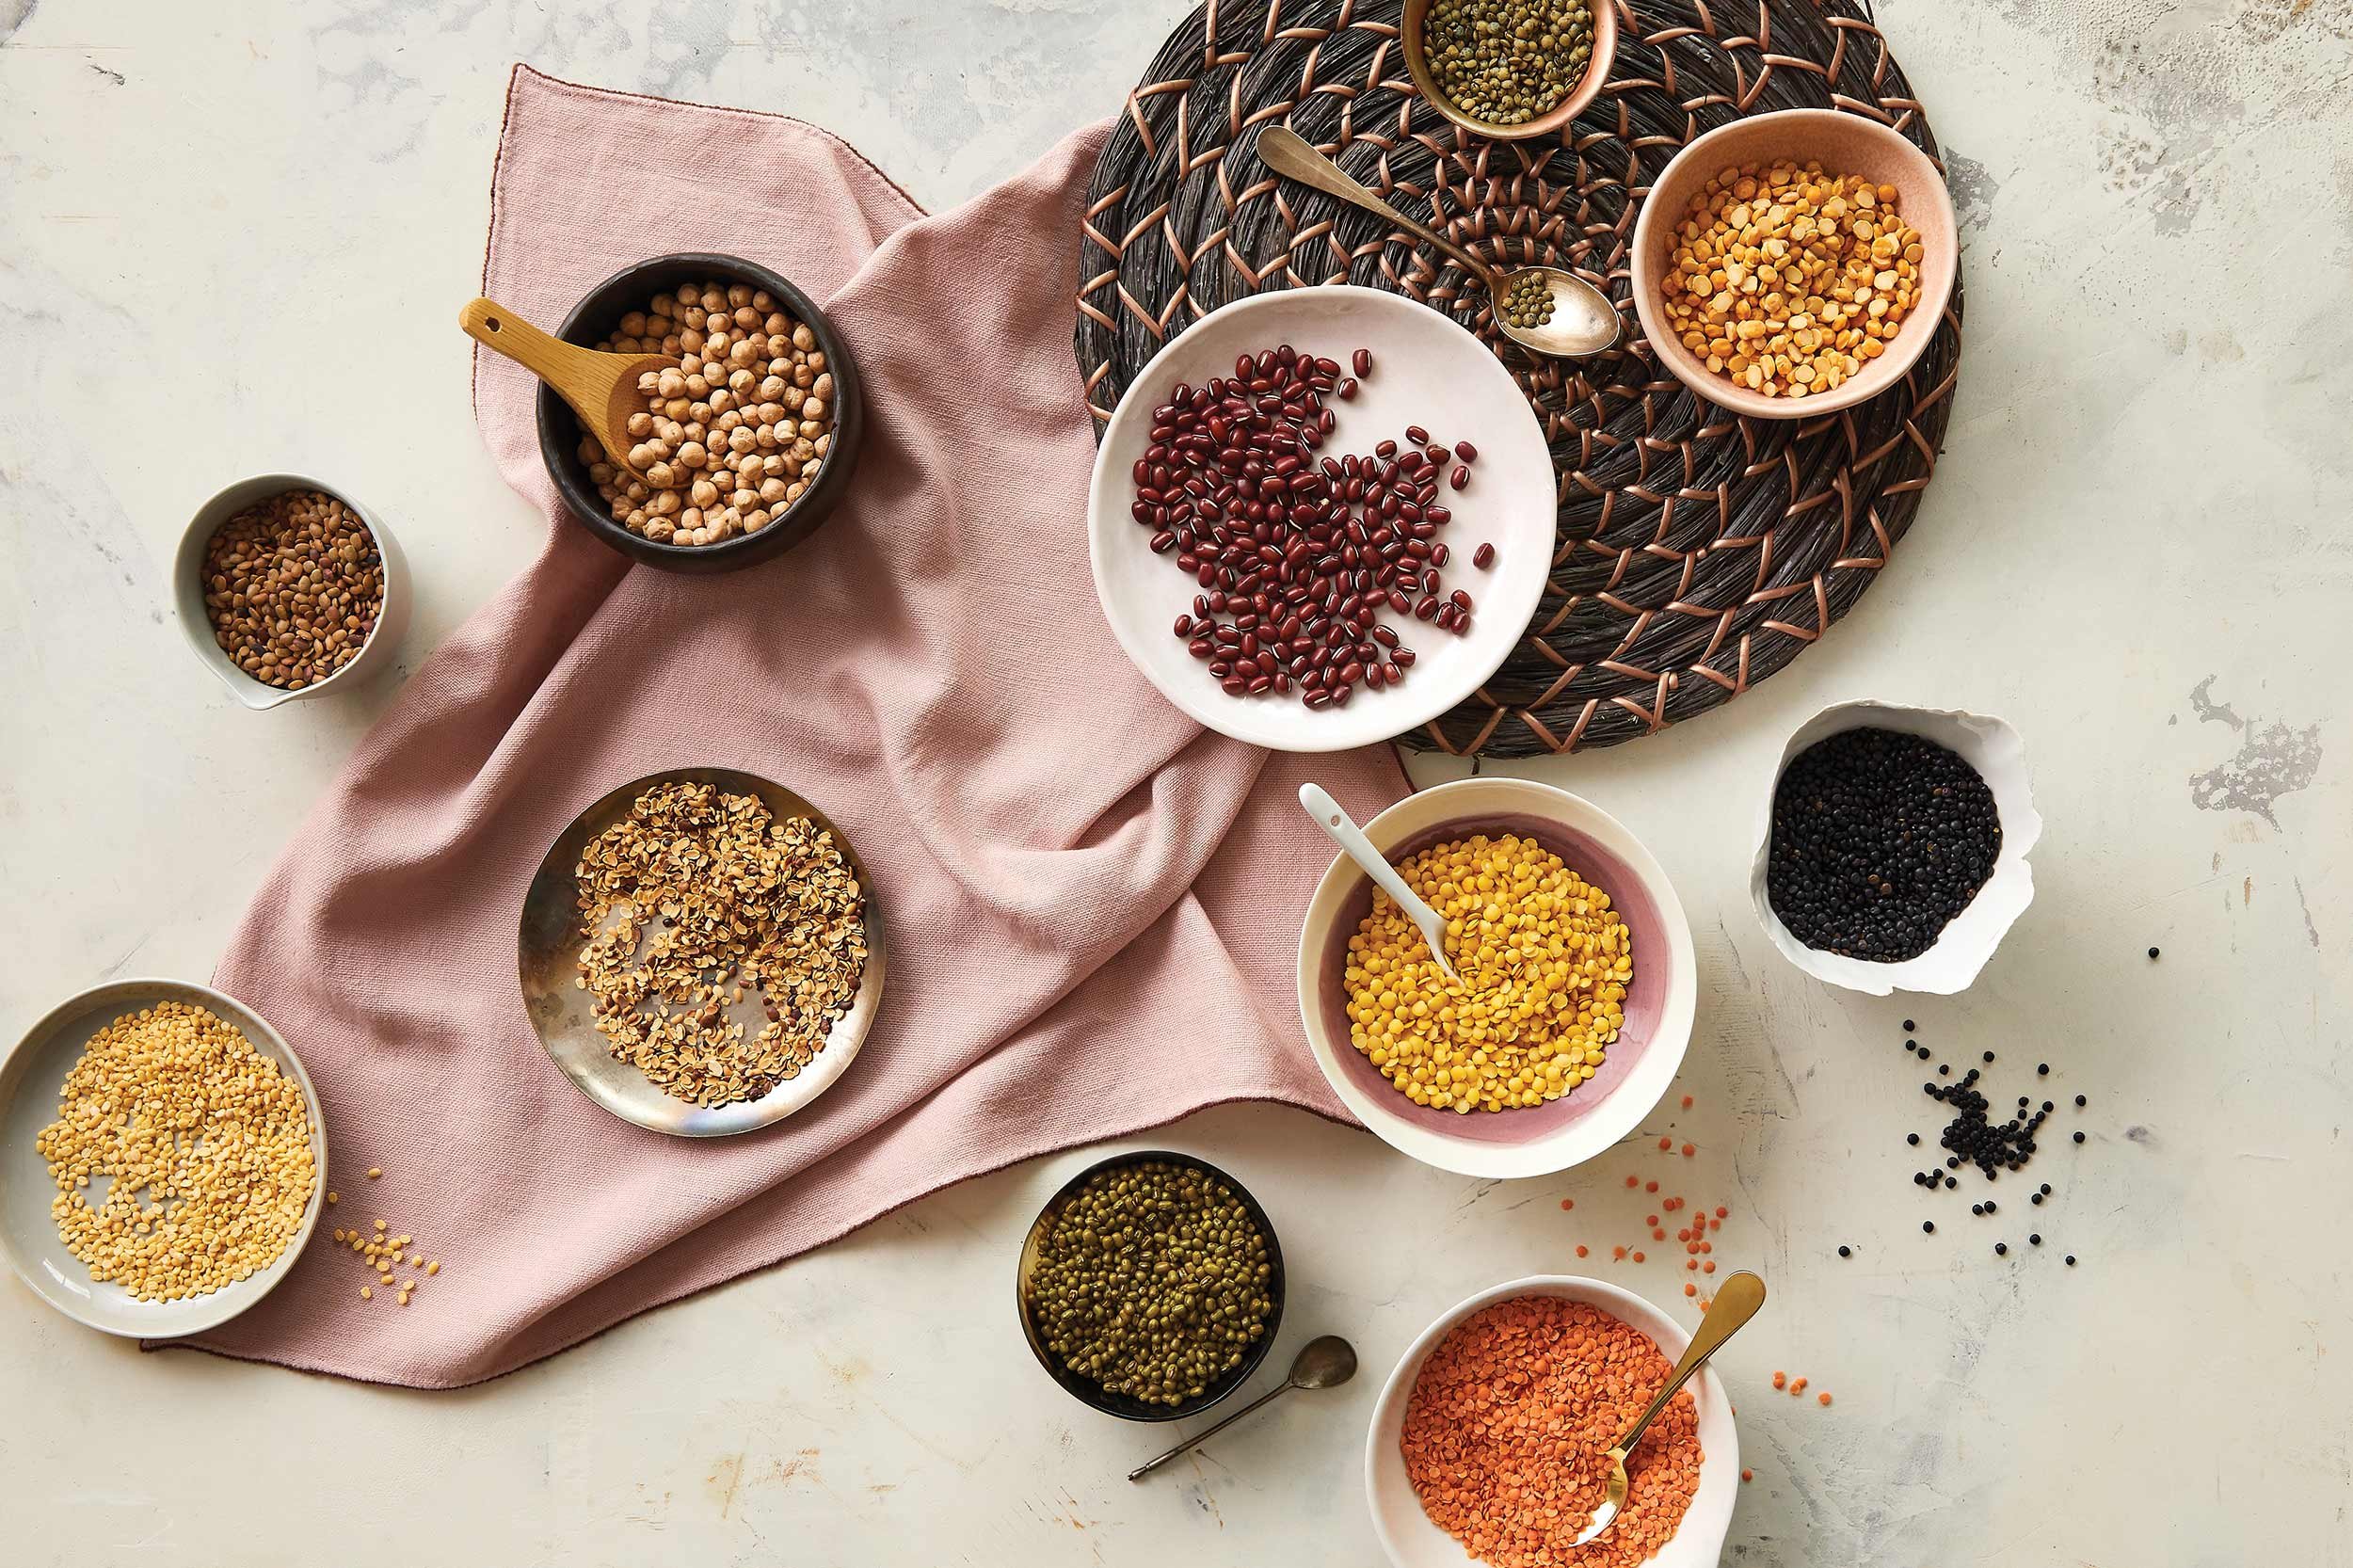 nyc-nj-cookbook-photographer-food-joy-of-balance-divya-alter-lentils.jpg